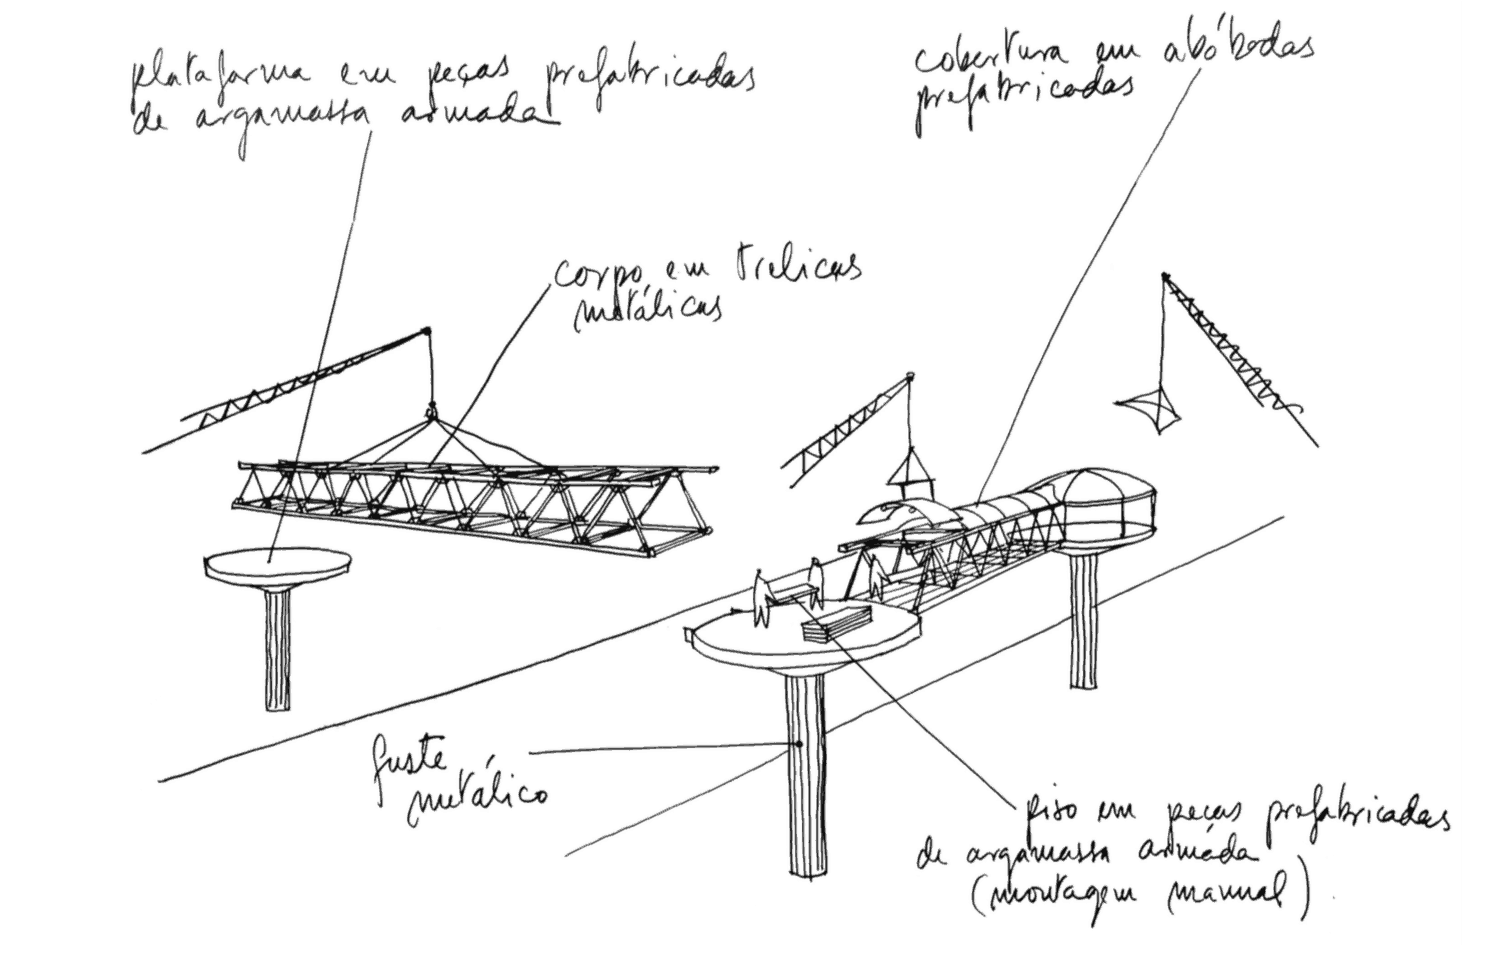 Assembly process. Industrialized footbridge, Brazil. Design and drawing by Lelé, 1987. JFL Archives